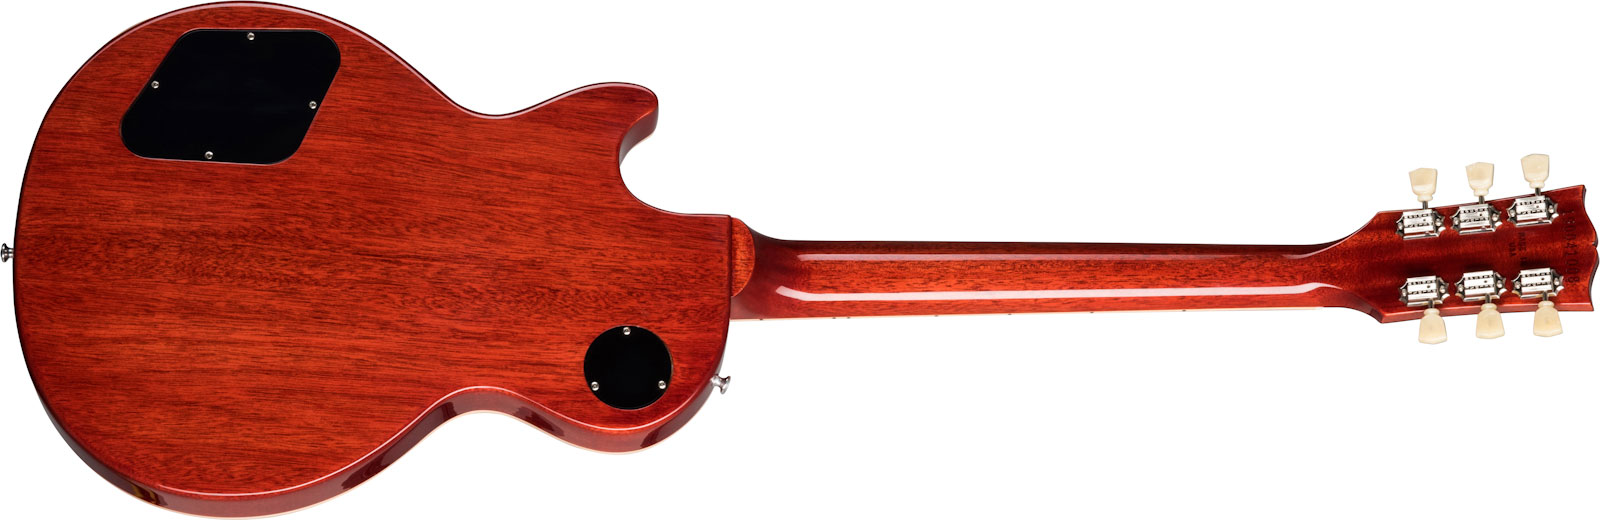 Gibson Les Paul Standard 50s 2h Ht Rw - Heritage Cherry Sunburst - Enkel gesneden elektrische gitaar - Variation 1